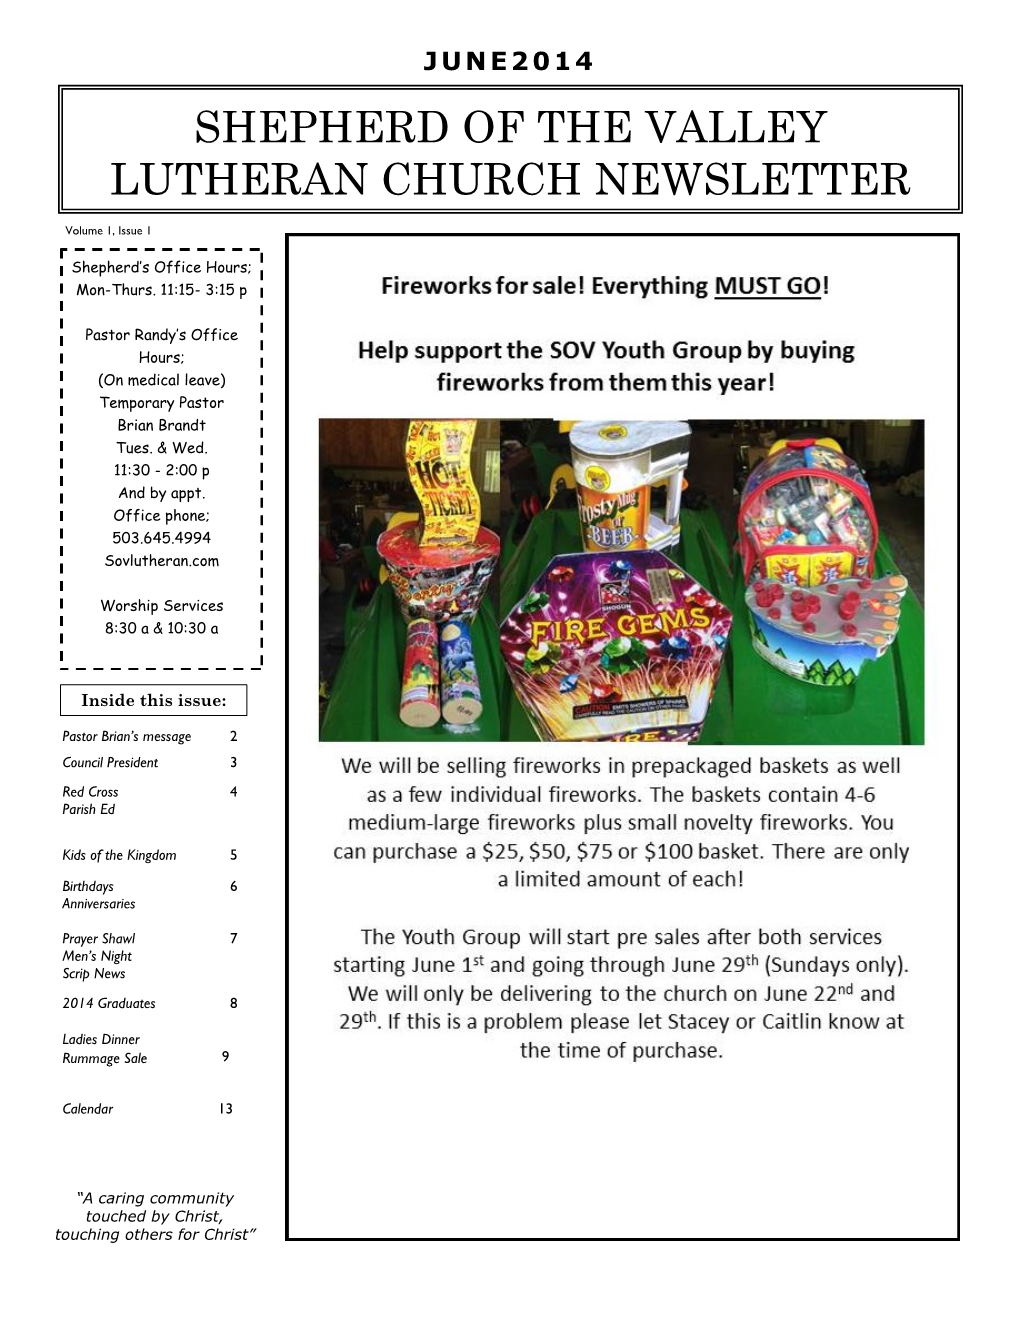 Shepherd of the Valley Lutheran Church Newsletter